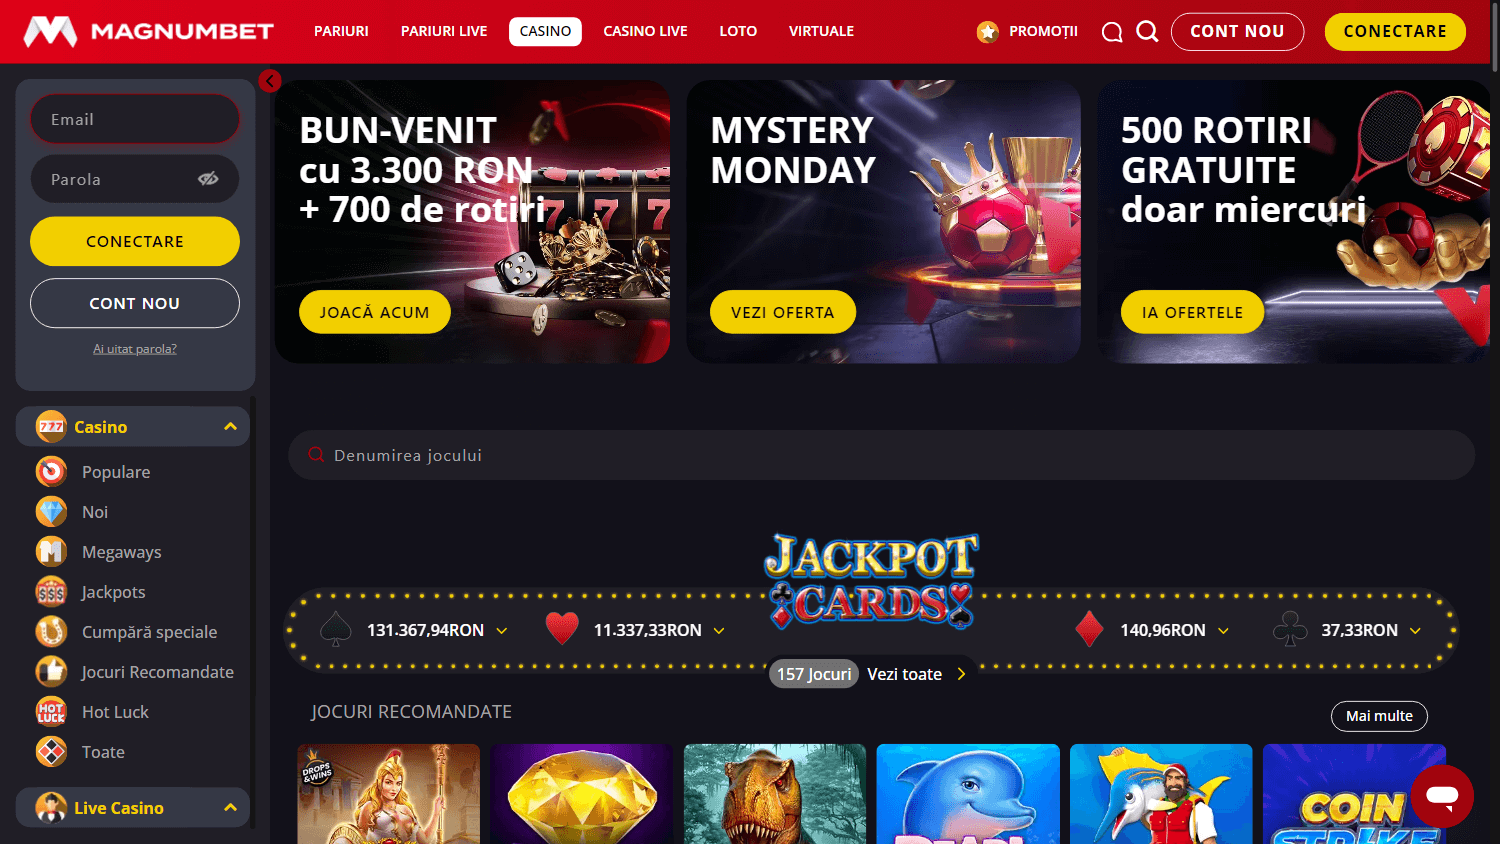 magnumbet_casino_homepage_desktop